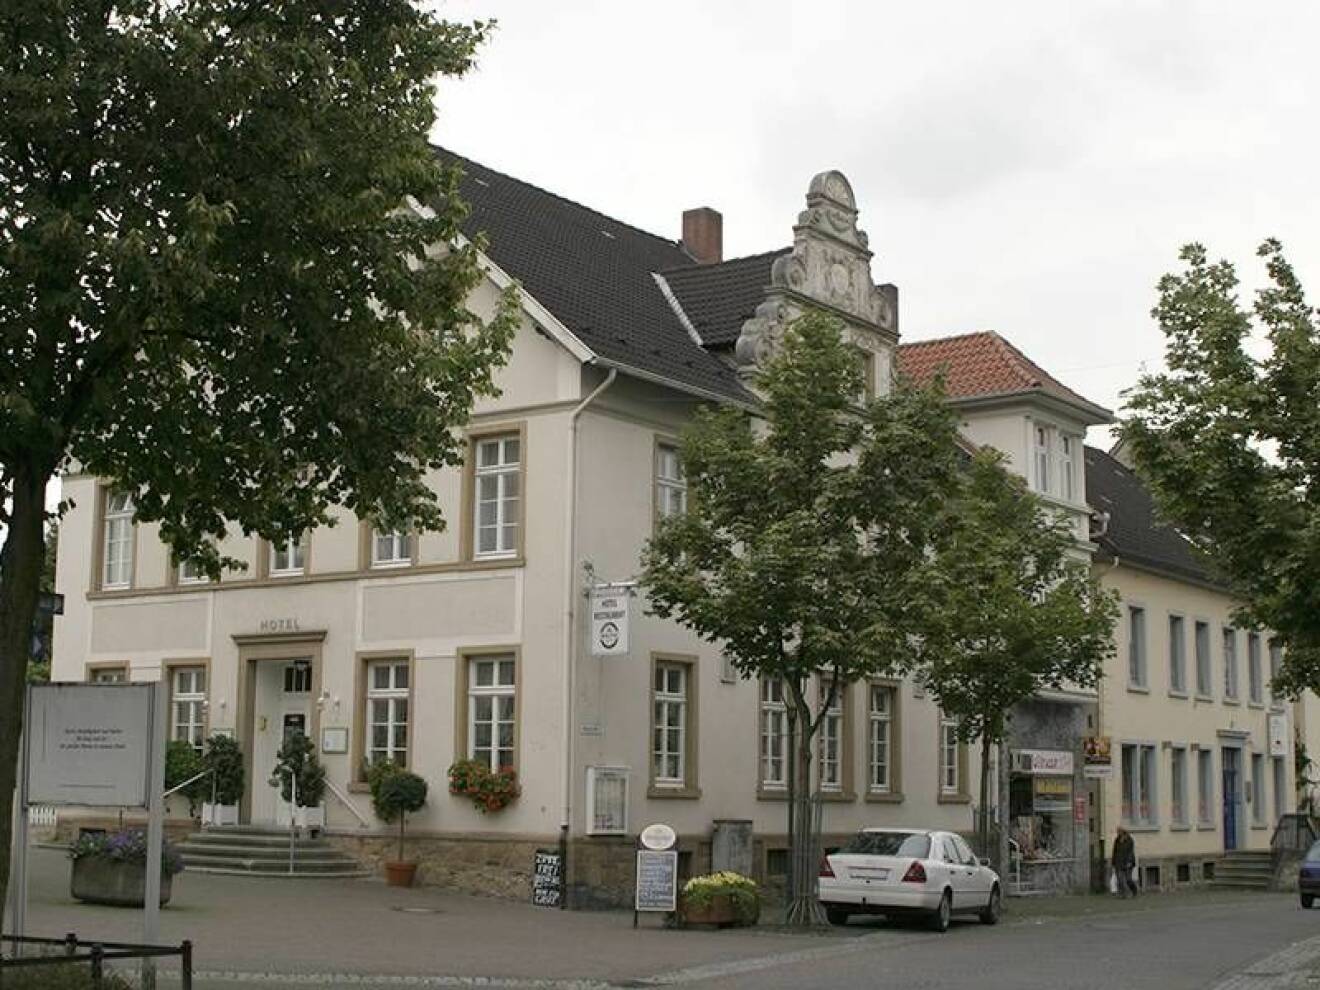 Hotel Junkerhaus